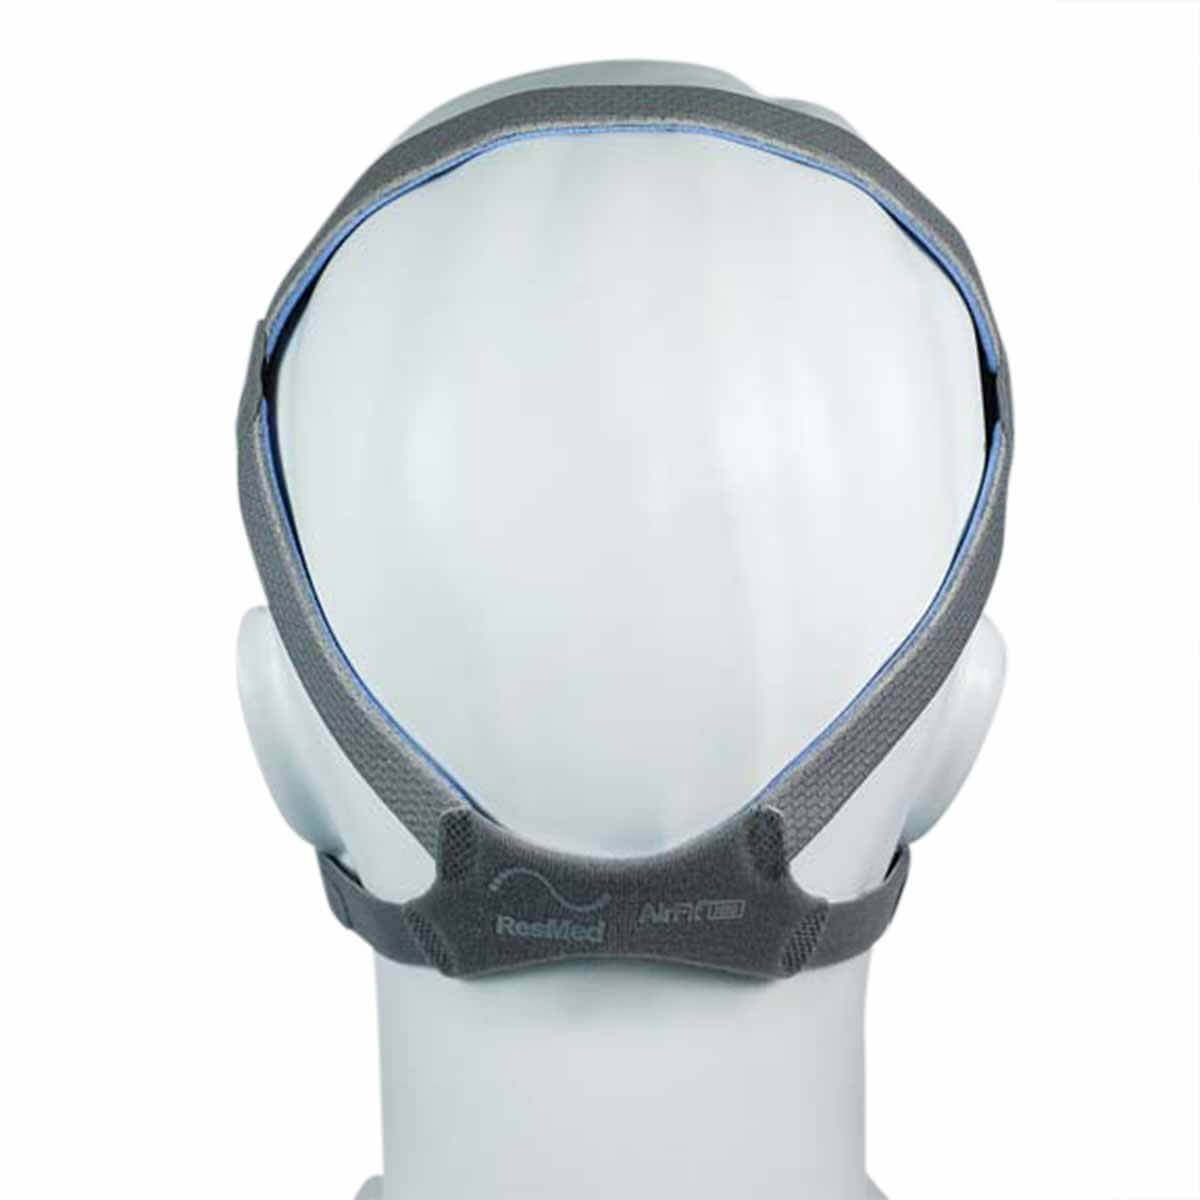 AirFit N10 Nasal CPAP Mask Headgear from ResMed